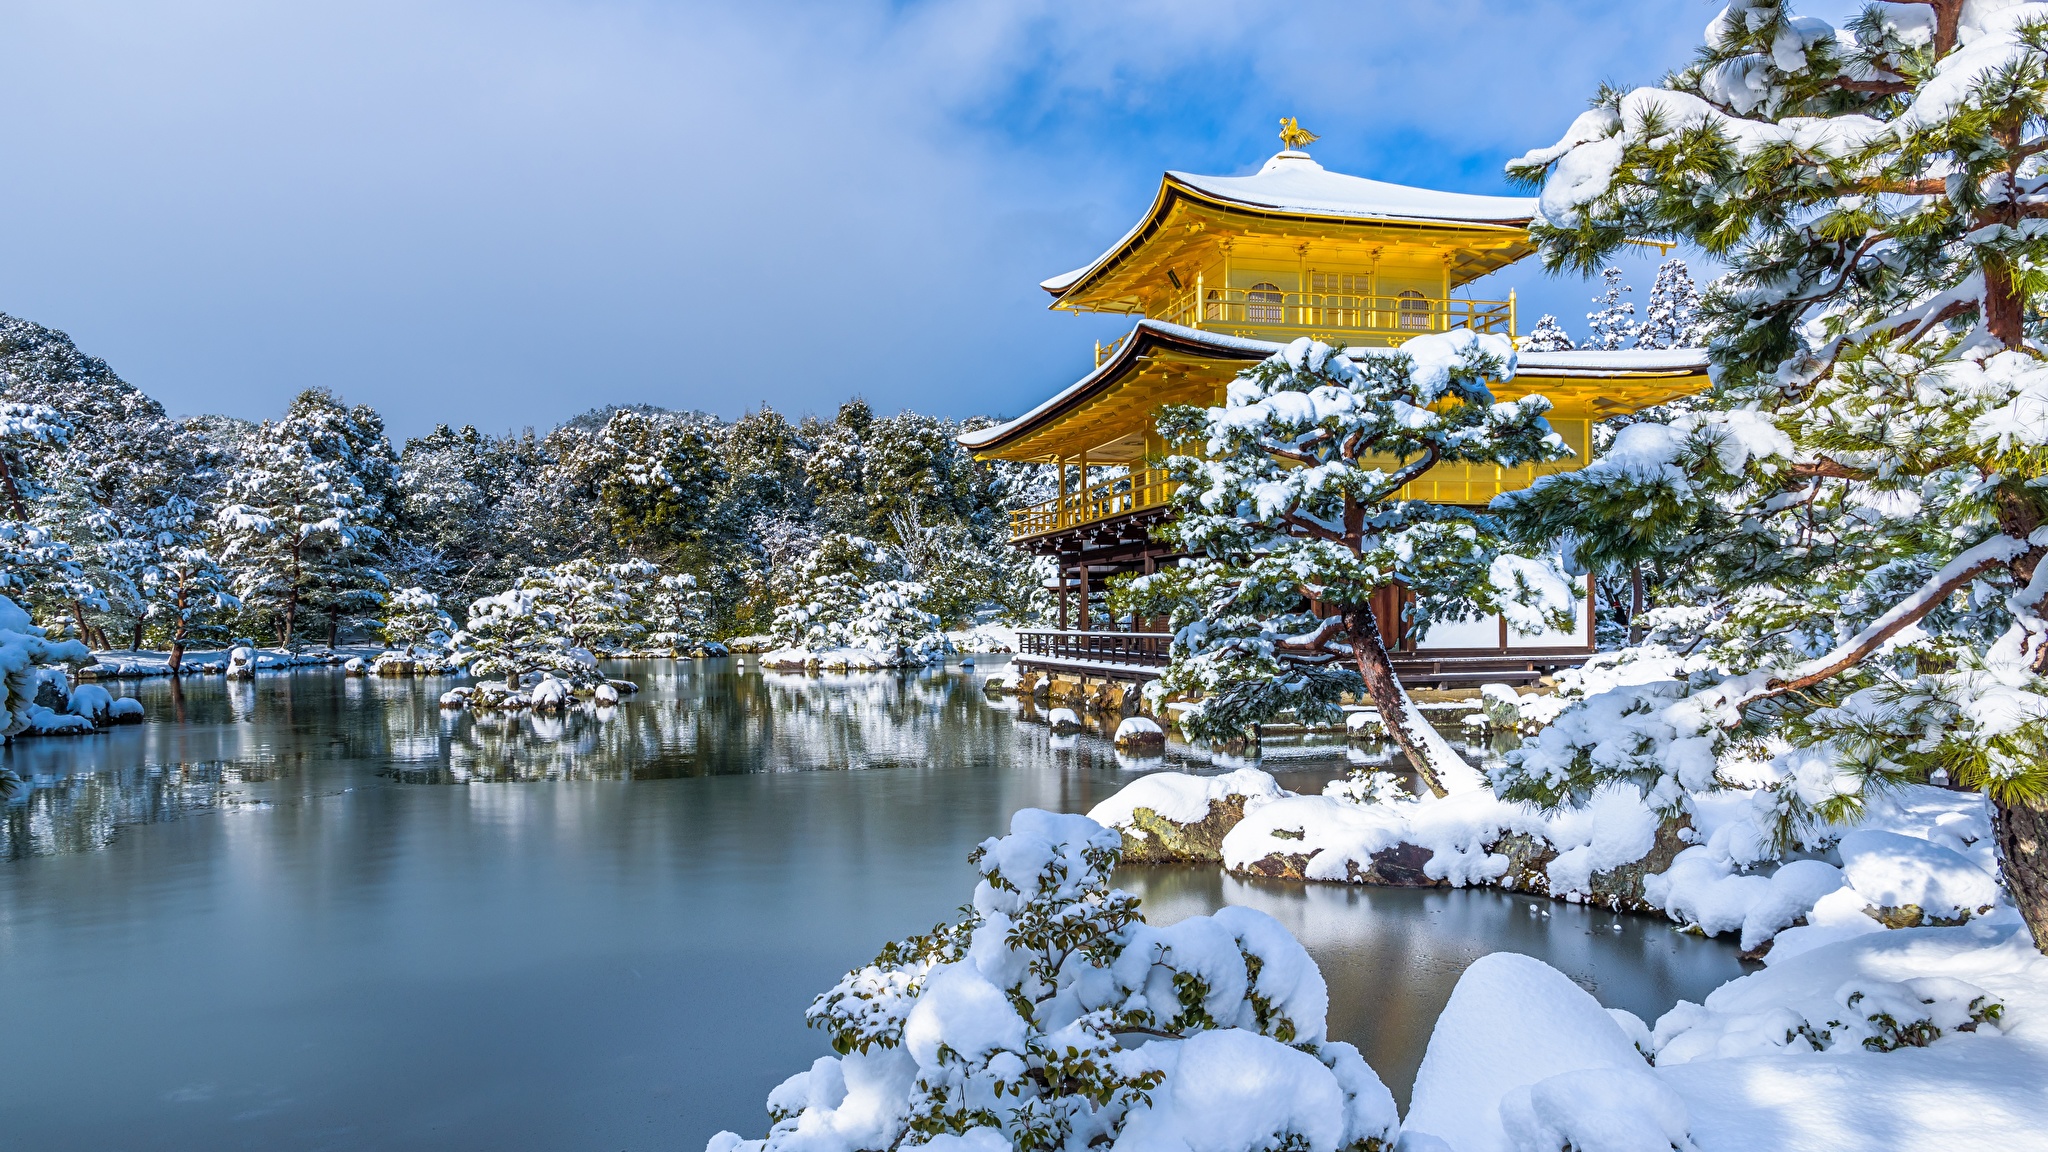 Winter_Pagodas_Pond_Japan_Kyoko-chi_Pond_532888_2048x1152.jpg